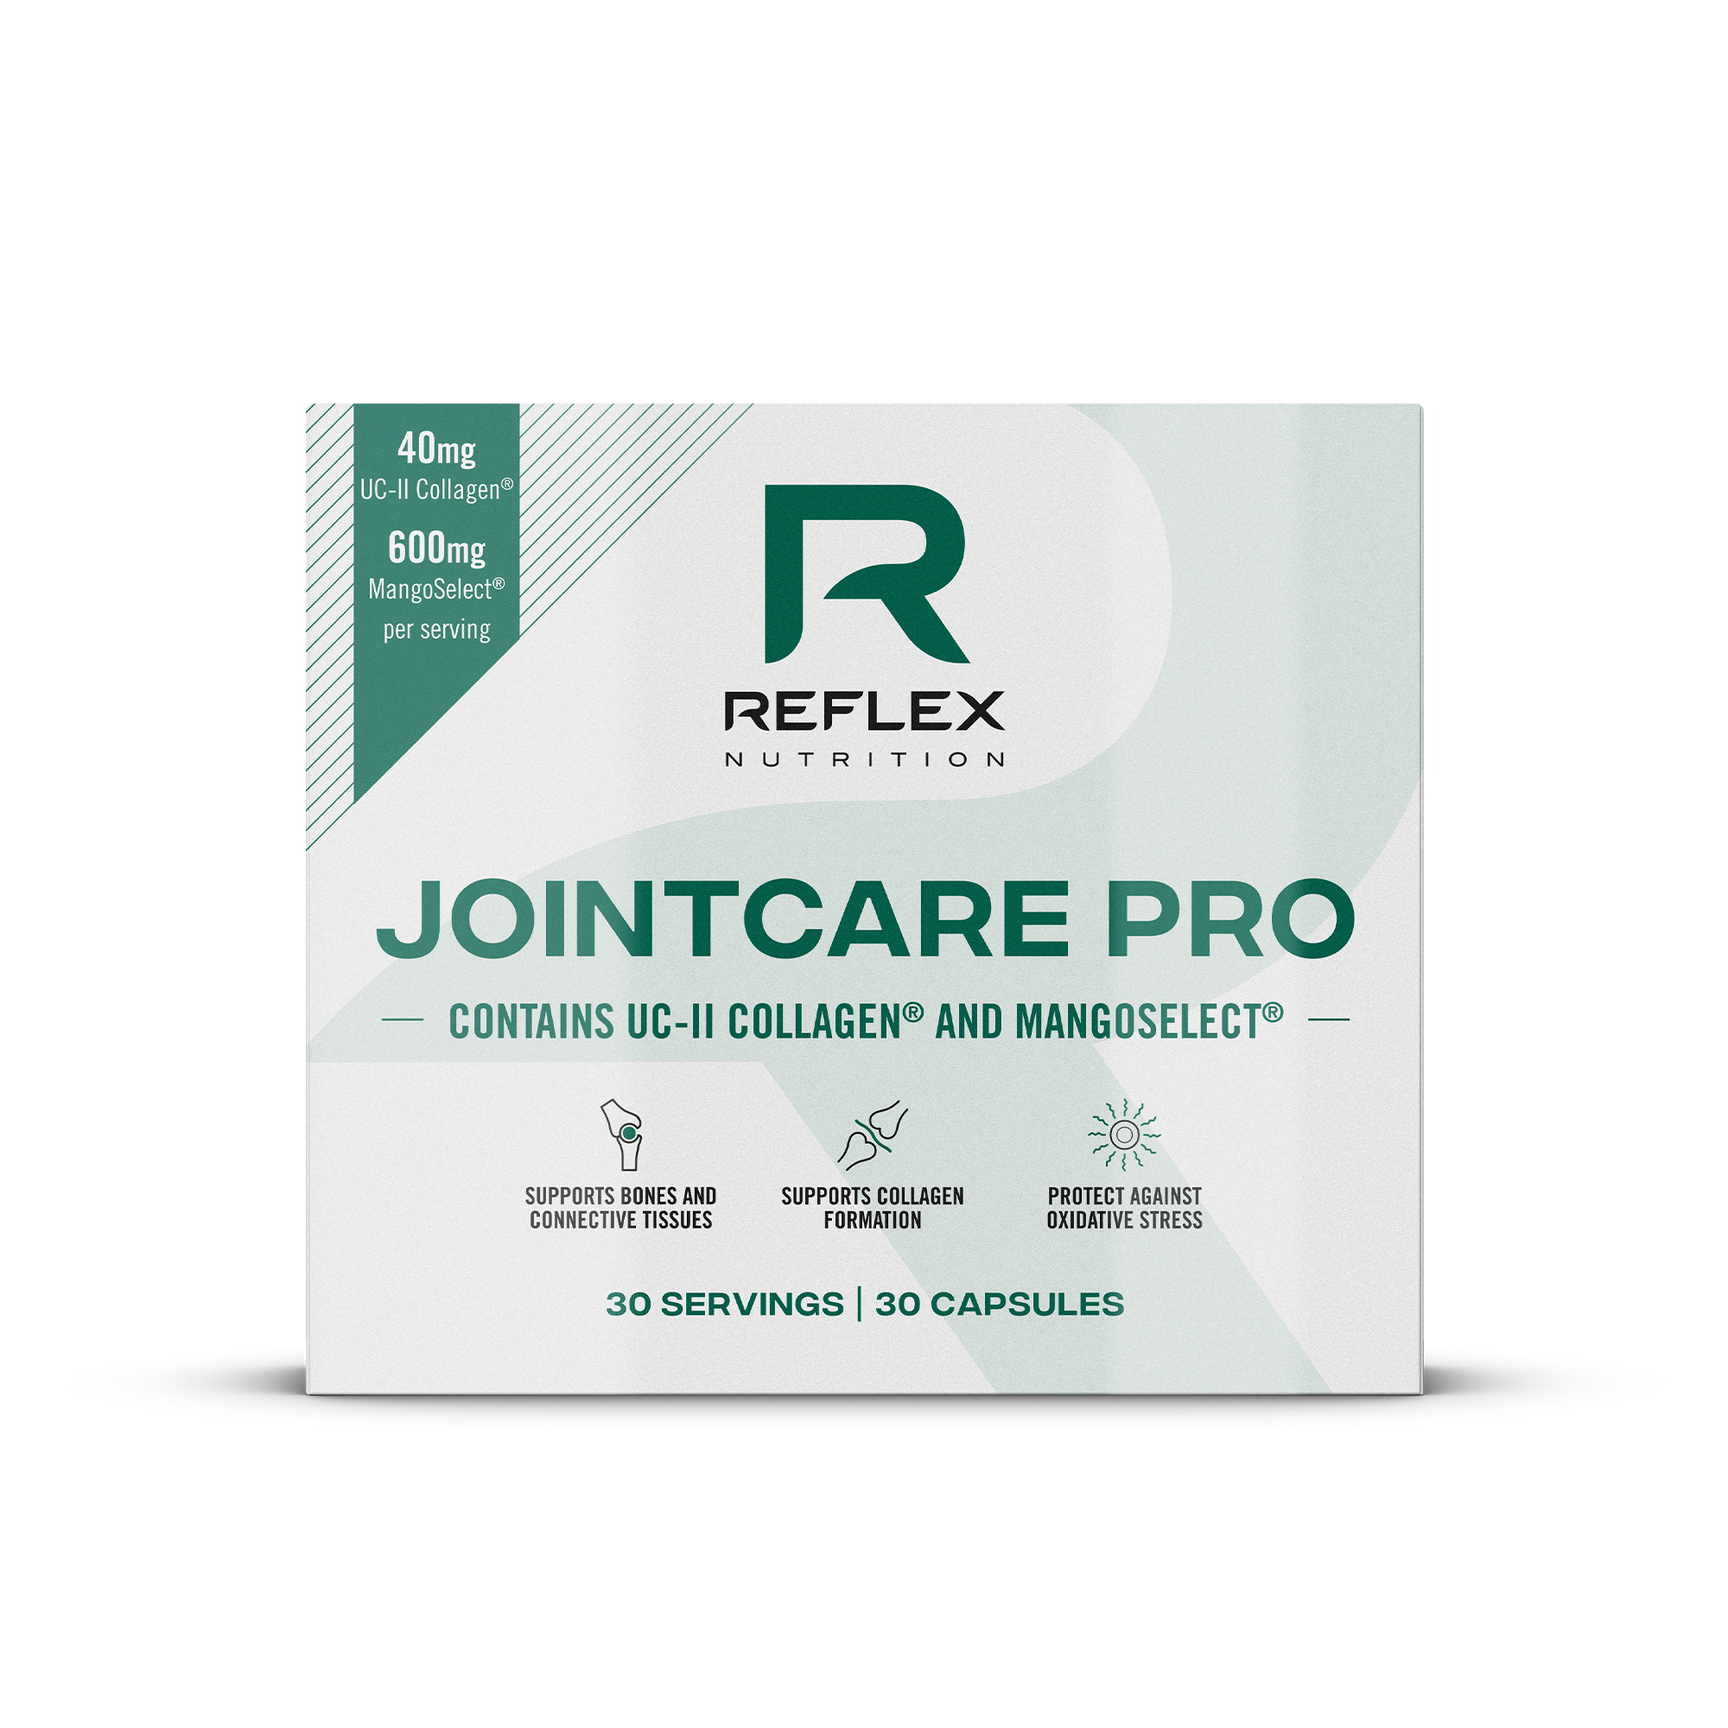 JointCare Pro